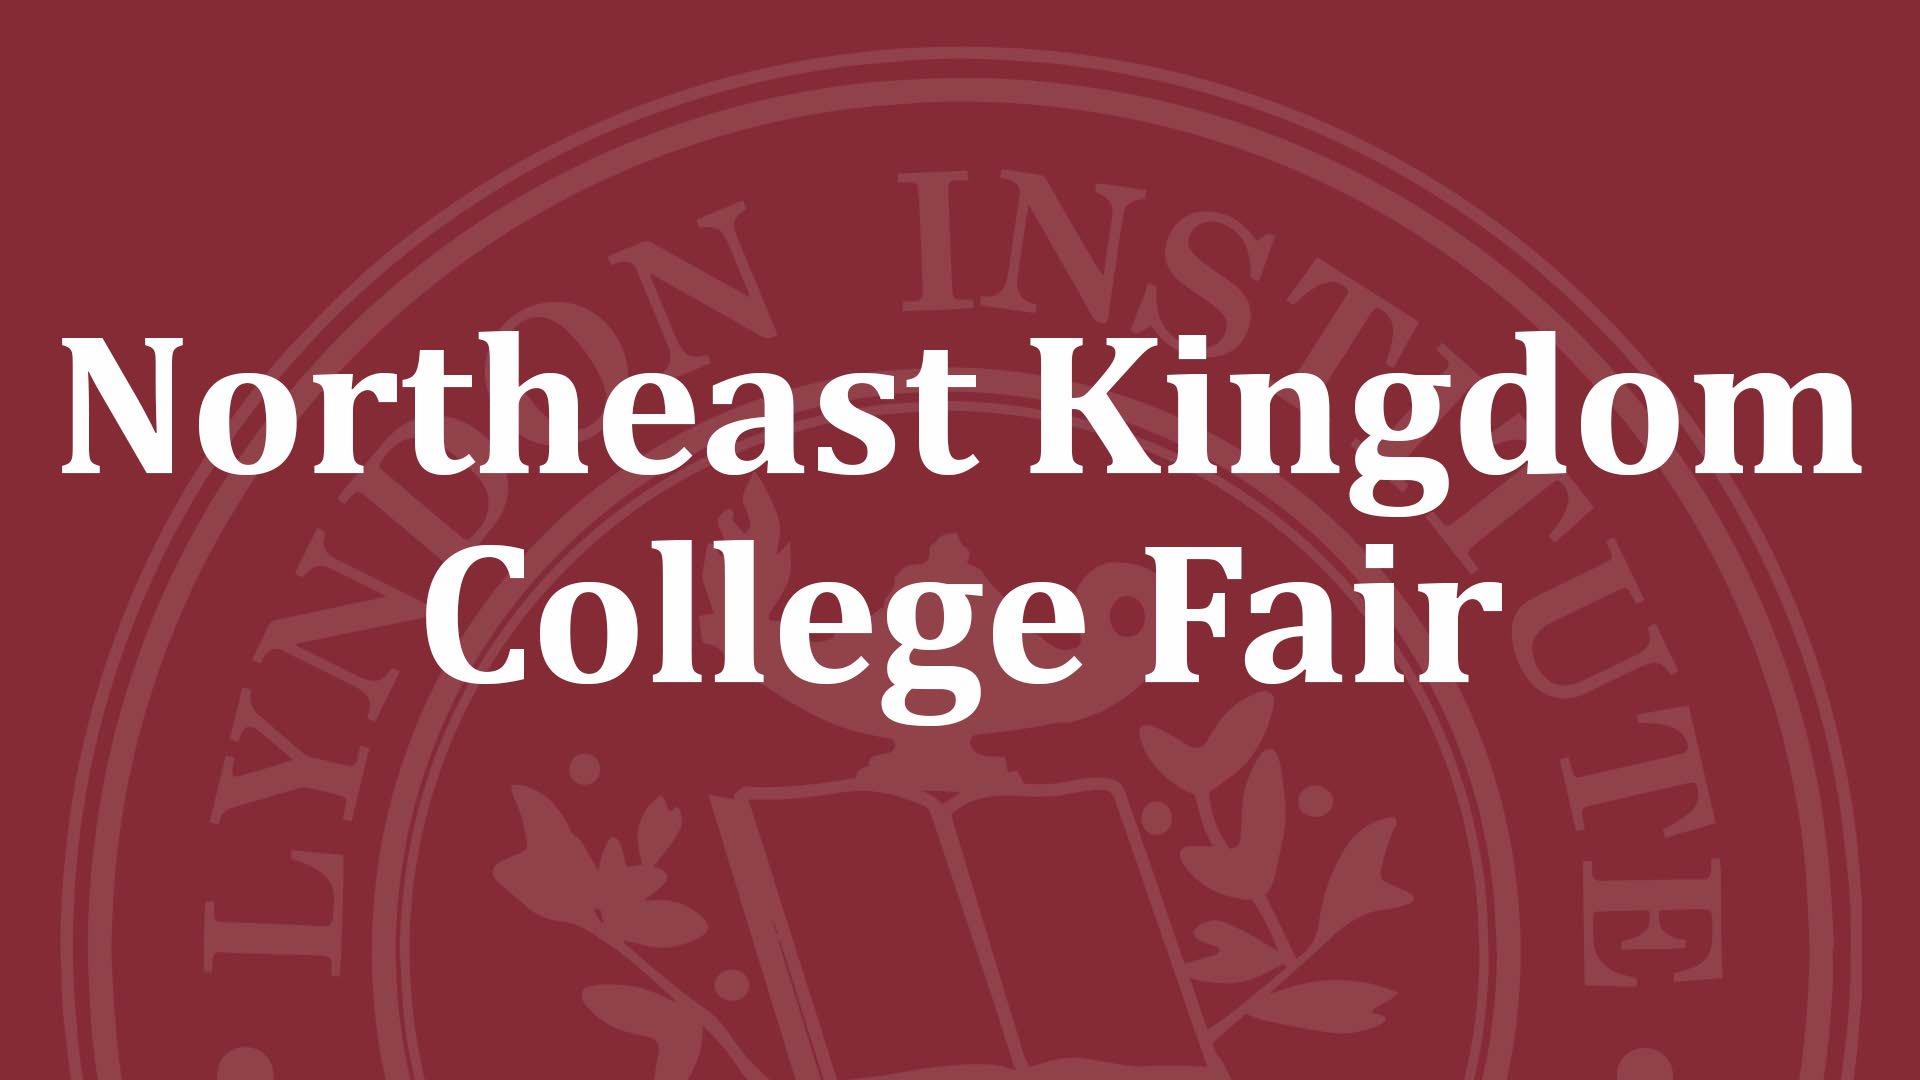 Northeast Kingdom College Fair for Parents & Students